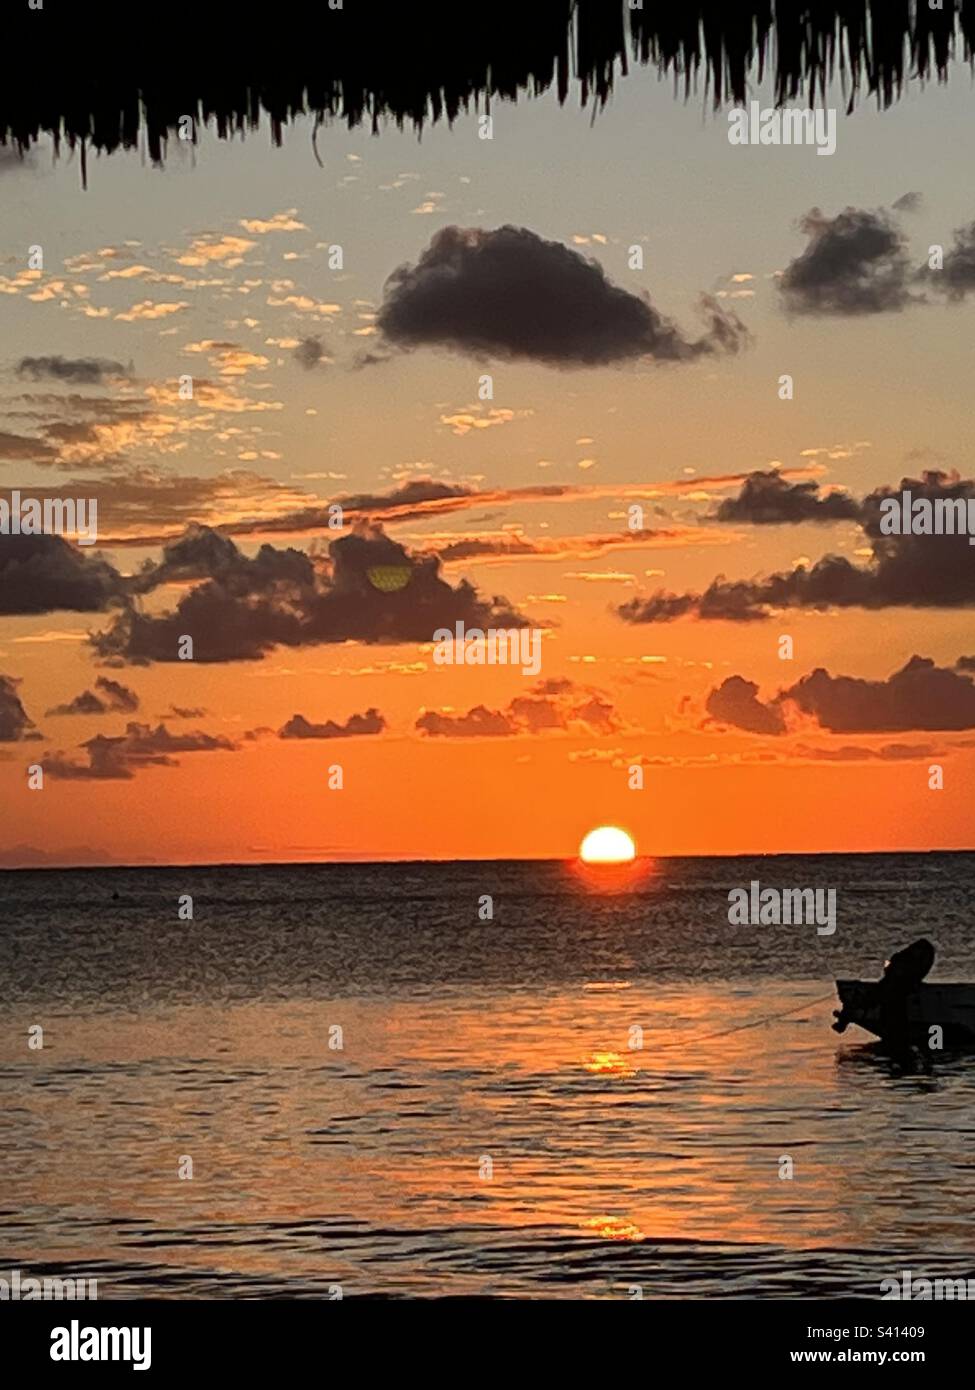 Beach, Cozumel, Mexico, Sunset, Sundown, Dusk, Twilight, Sea, Clouds, boat, Palapa, Sea, Horizon, Romantic evening, Sun, Orange and blue sky Stock Photo